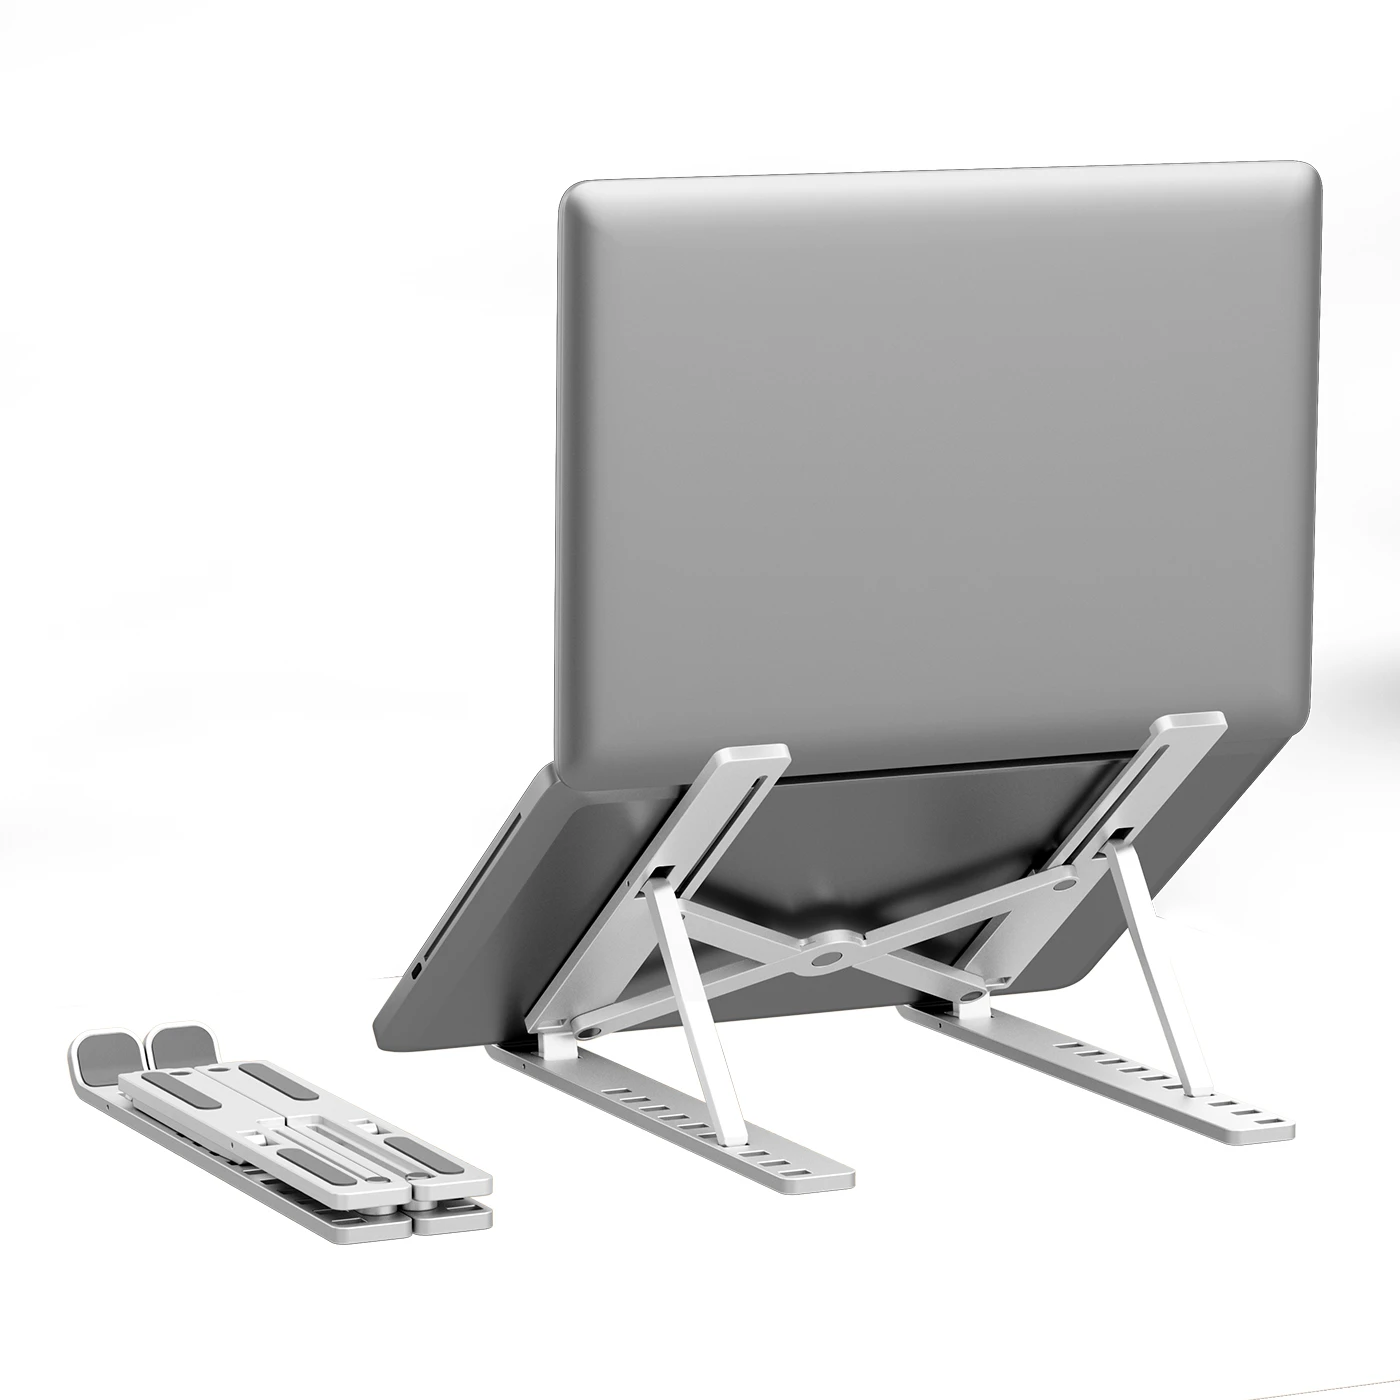 Ergonomic Flexible Height Adjustable plastic Foldable Portable Desktop Laptop Notebook Holder Riser Stand